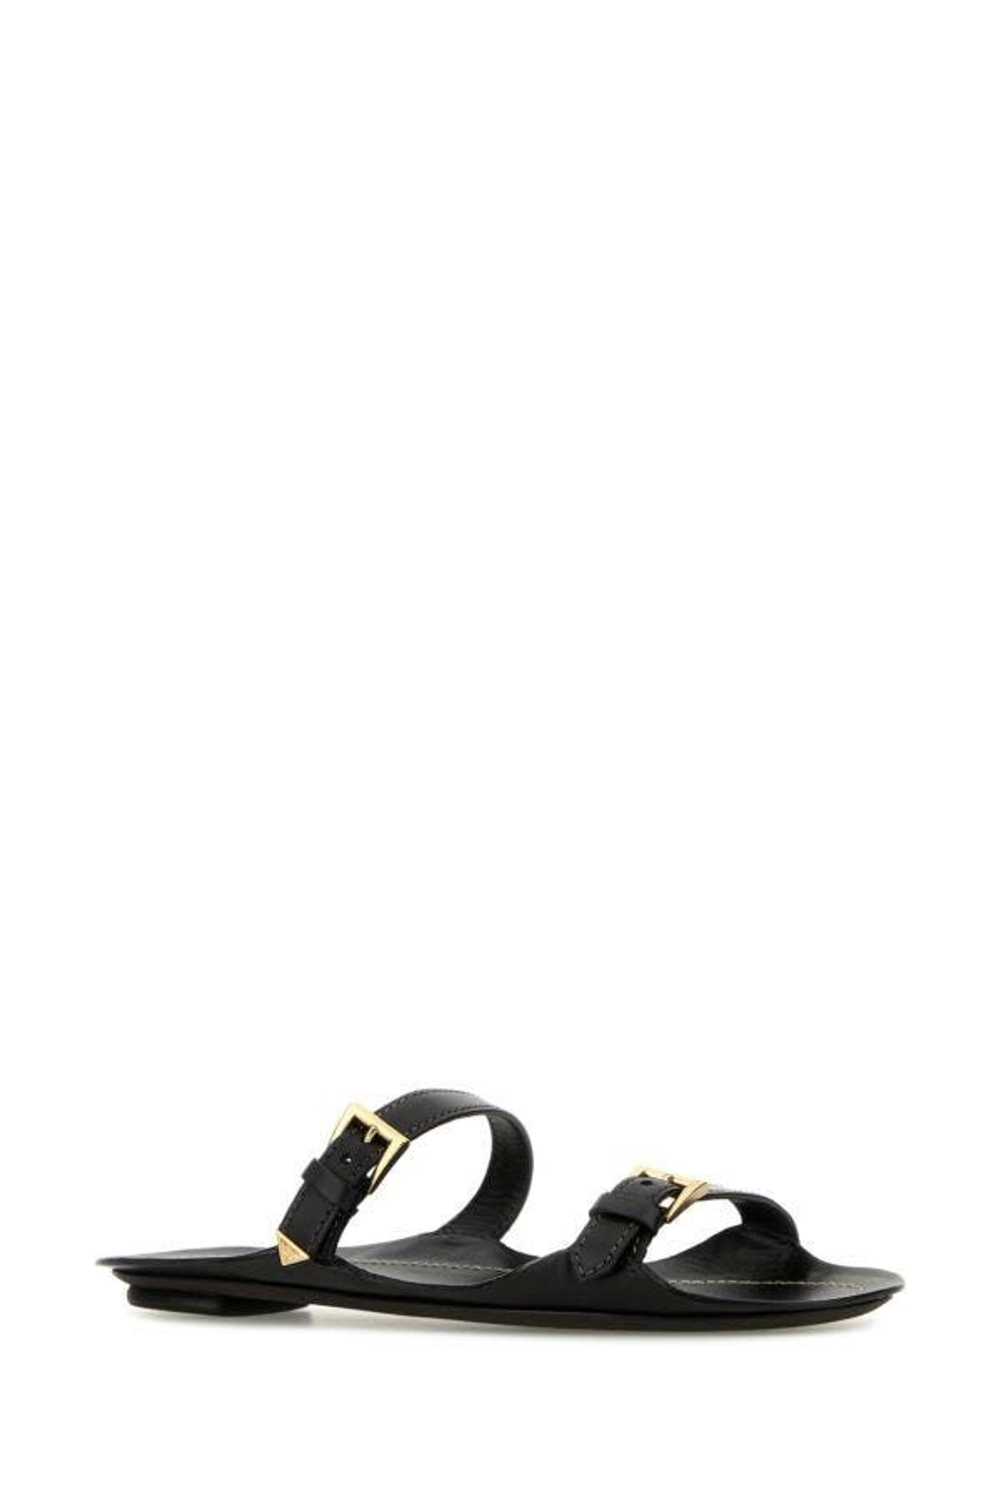 Prada Black Leather Slippers - image 4